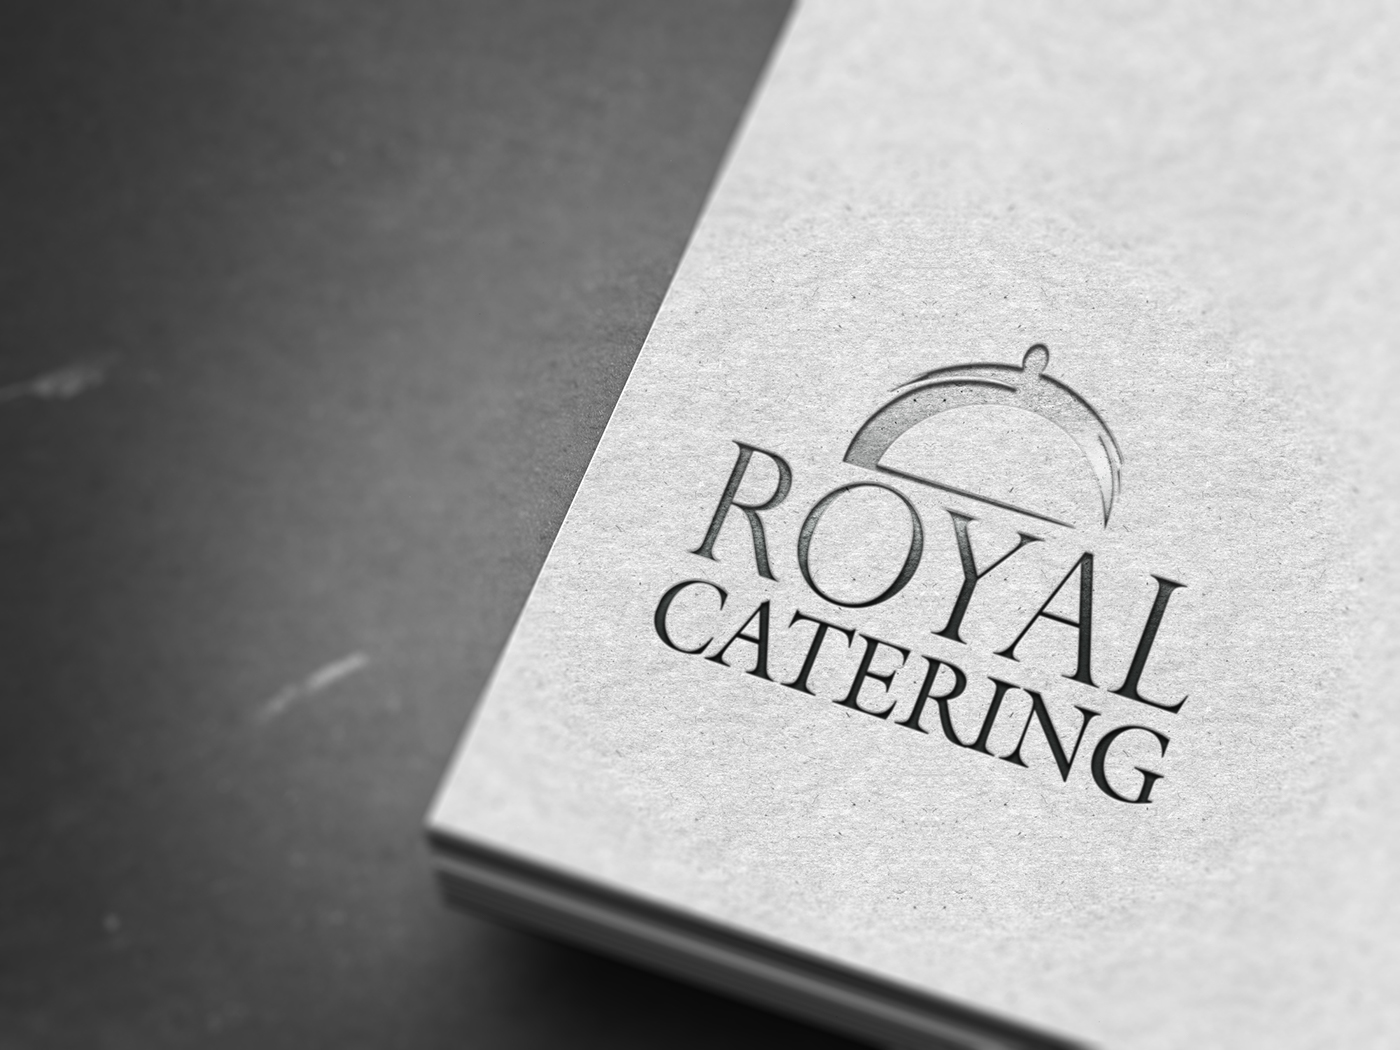 Royal catering logo design cateringlogo